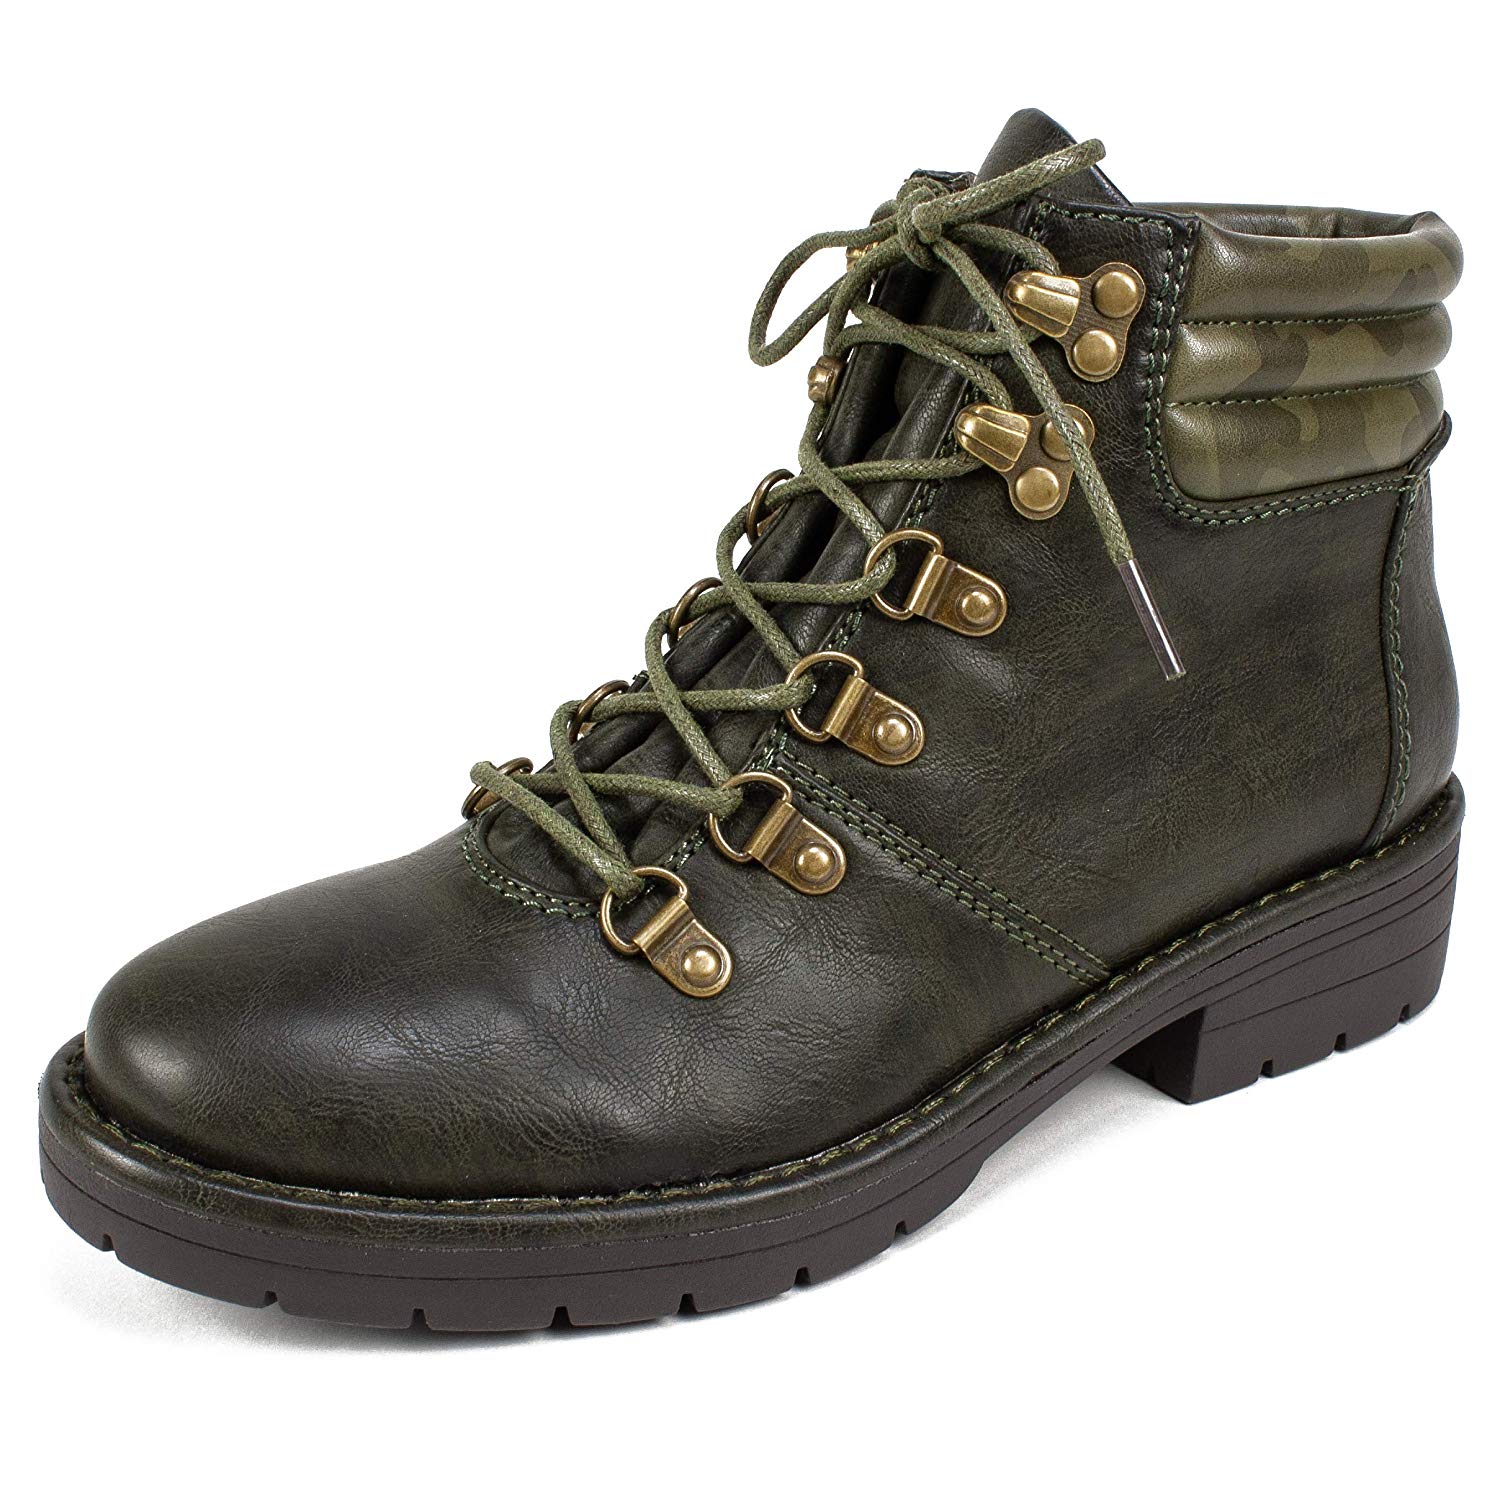 SEVEN DIALS Shoes REEDY Women's Boot, Black, Size 7.5 6hAP